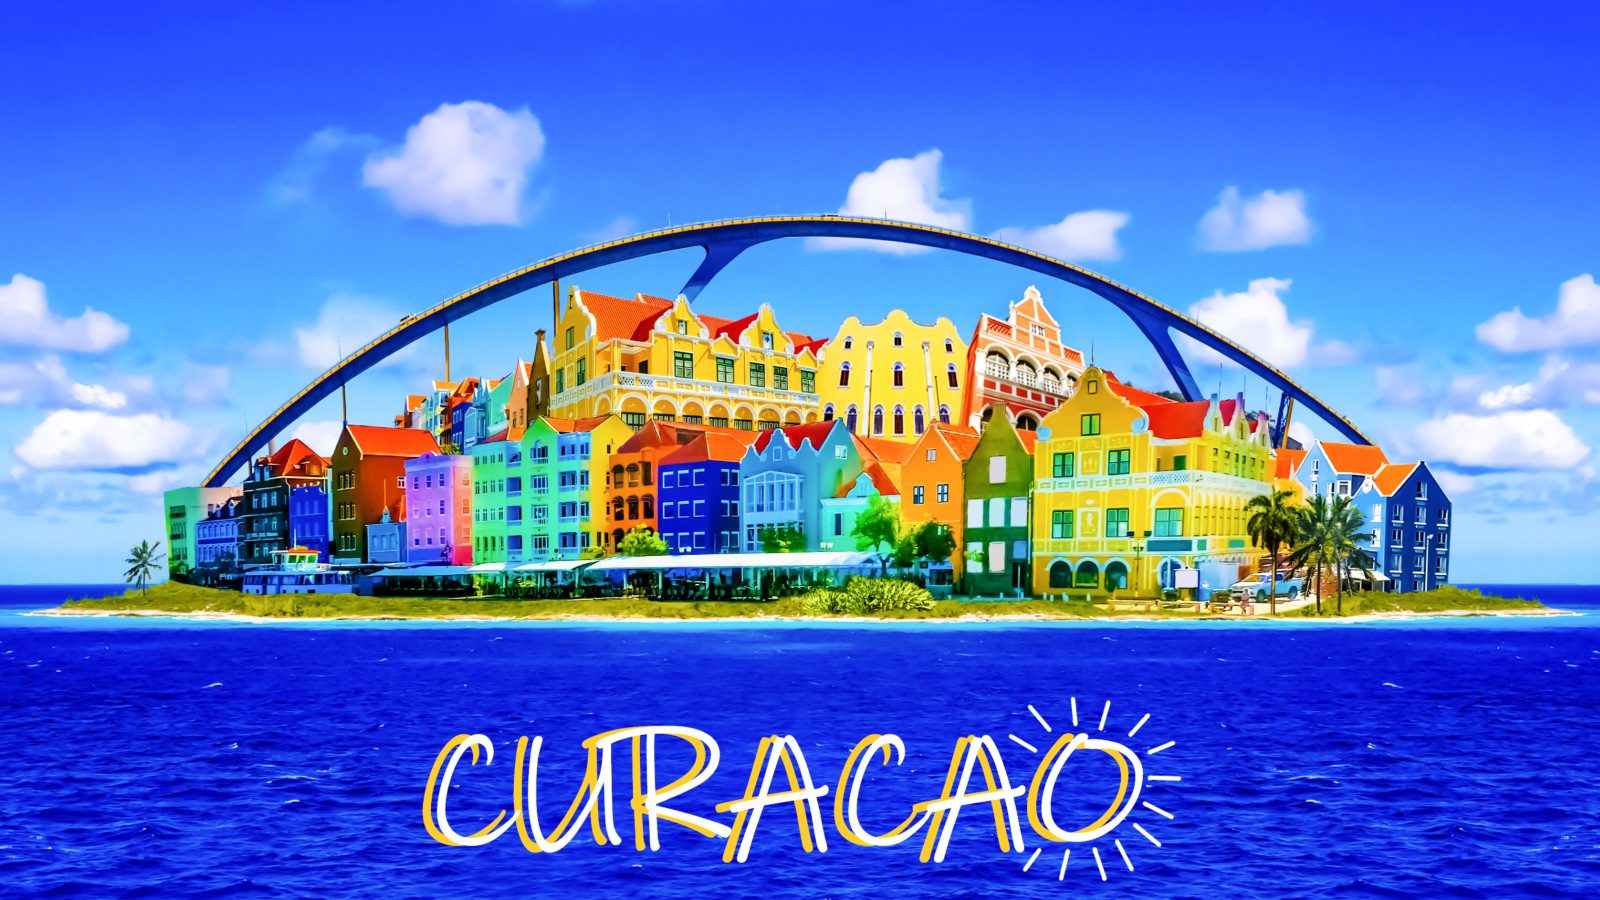 Curacao landmarks collage